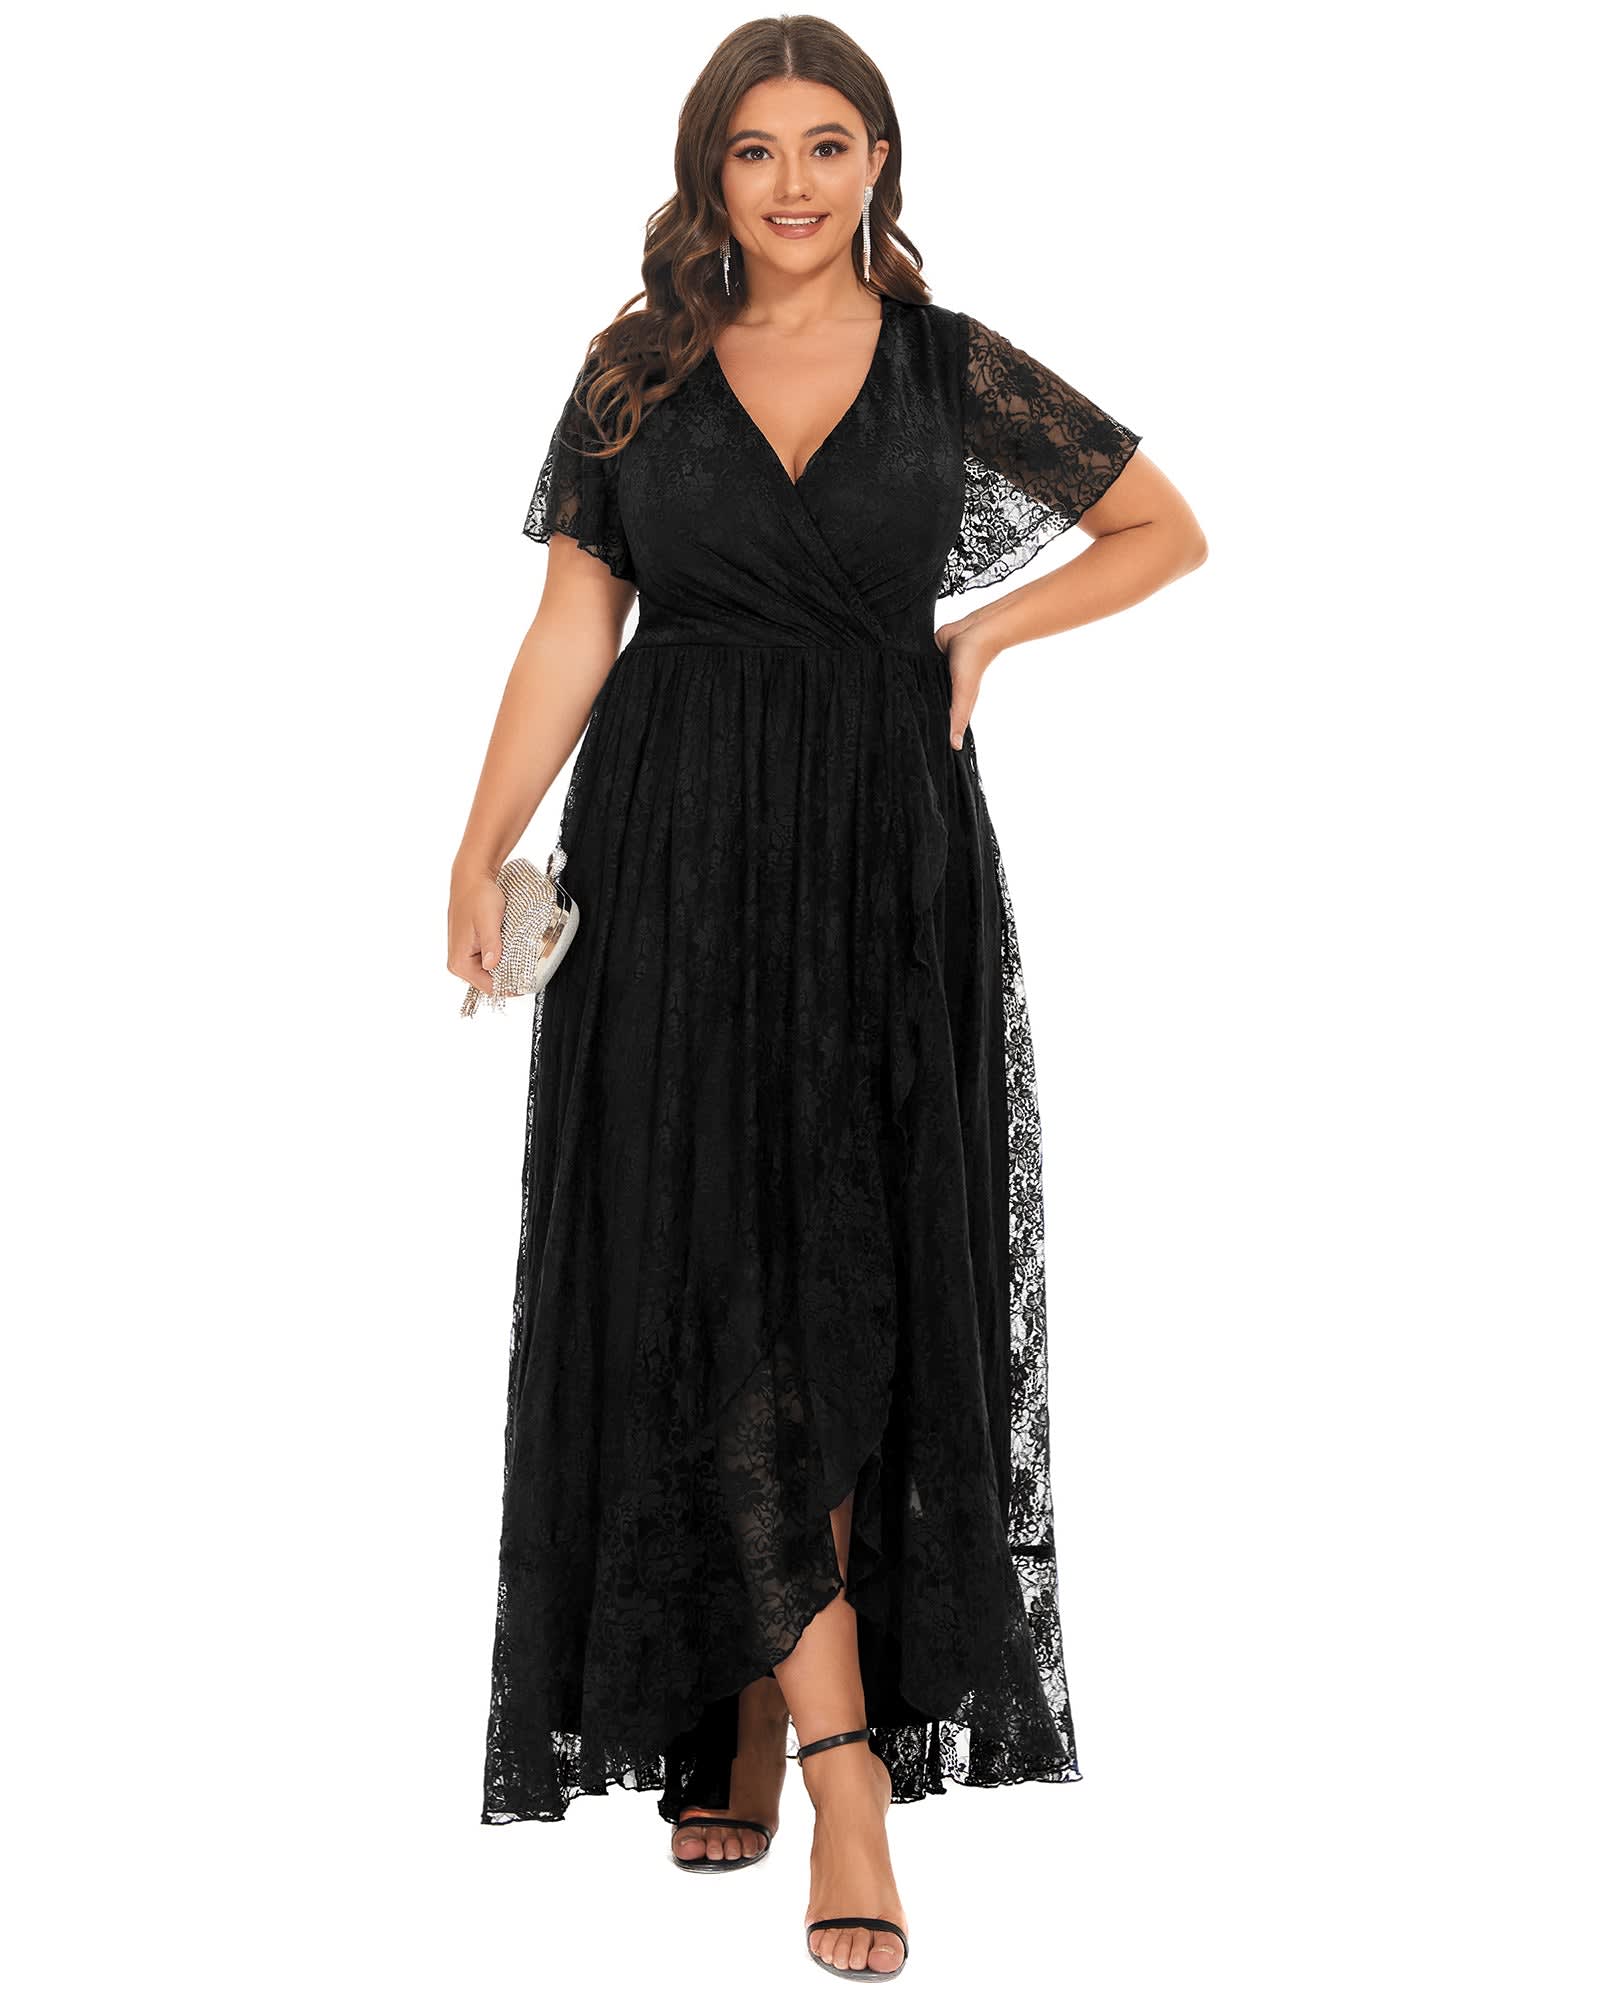 Elegant Black Formal Prom Dresses,Black Maxi Dresses With Sleeves UK,Black  Maxi Dress With Lace Top